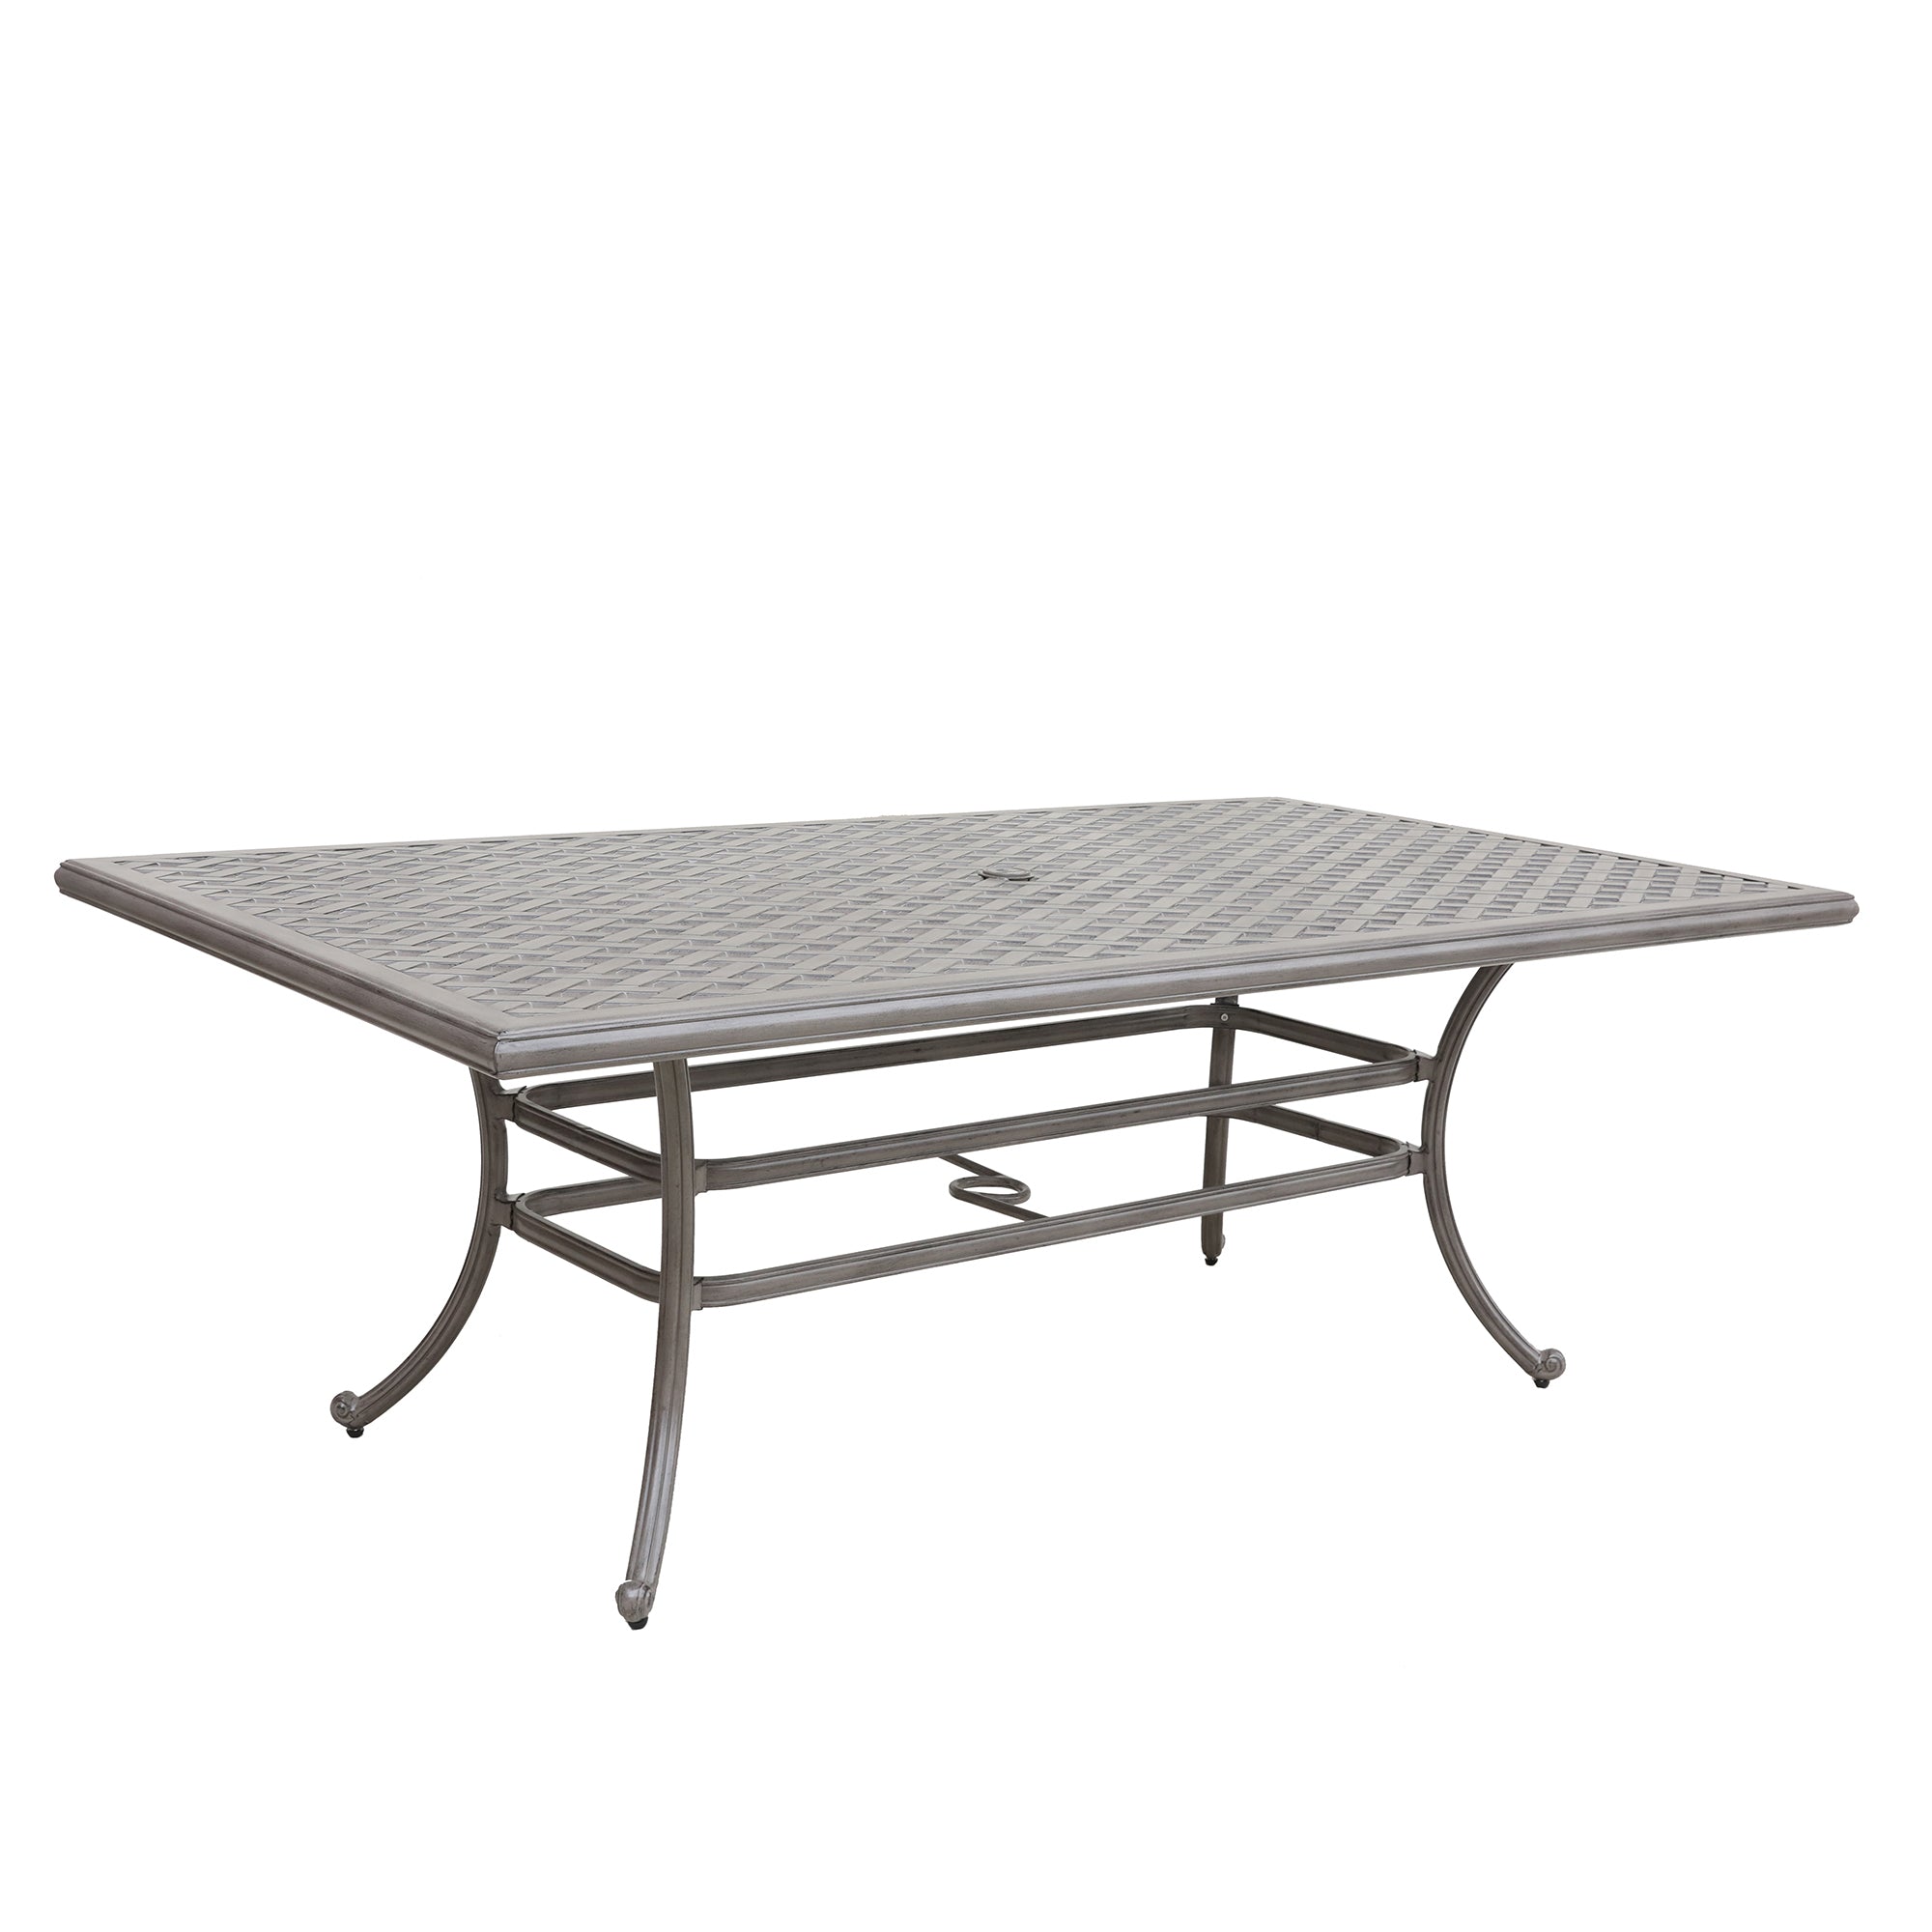 46x86 Inch Cast Aluminum Rectangle Table